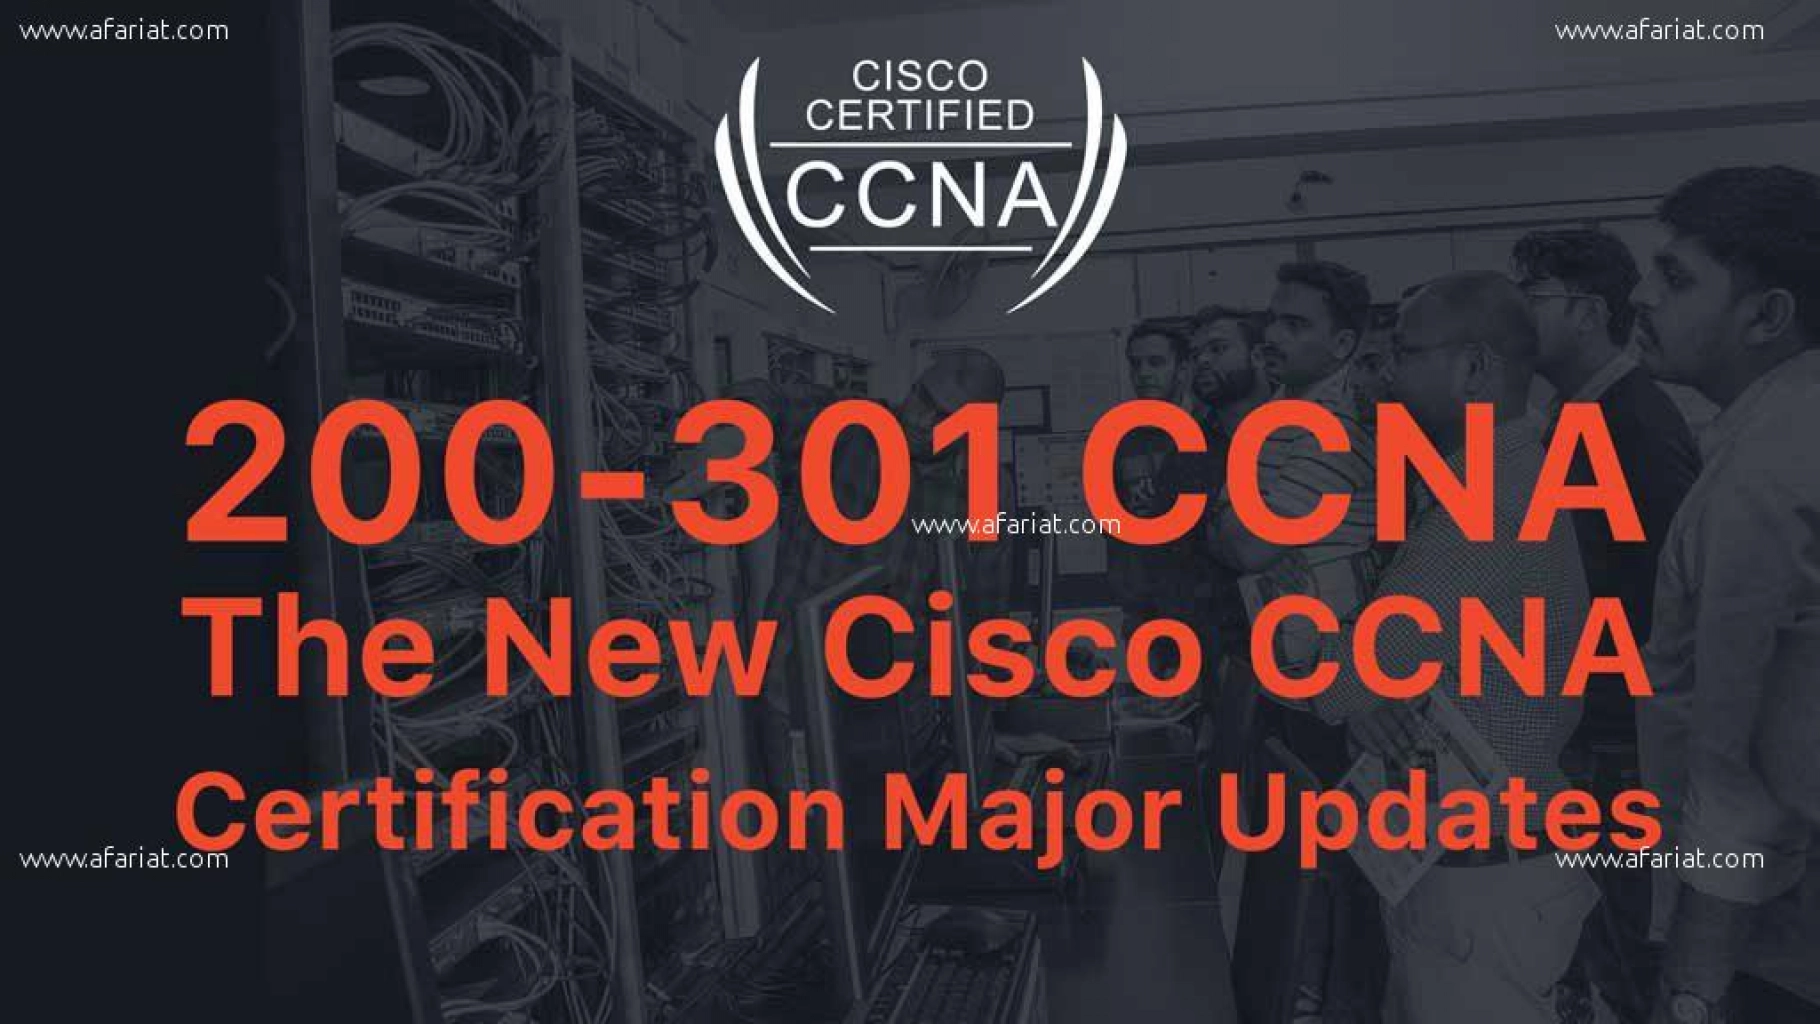 Certification CISCO CCNA